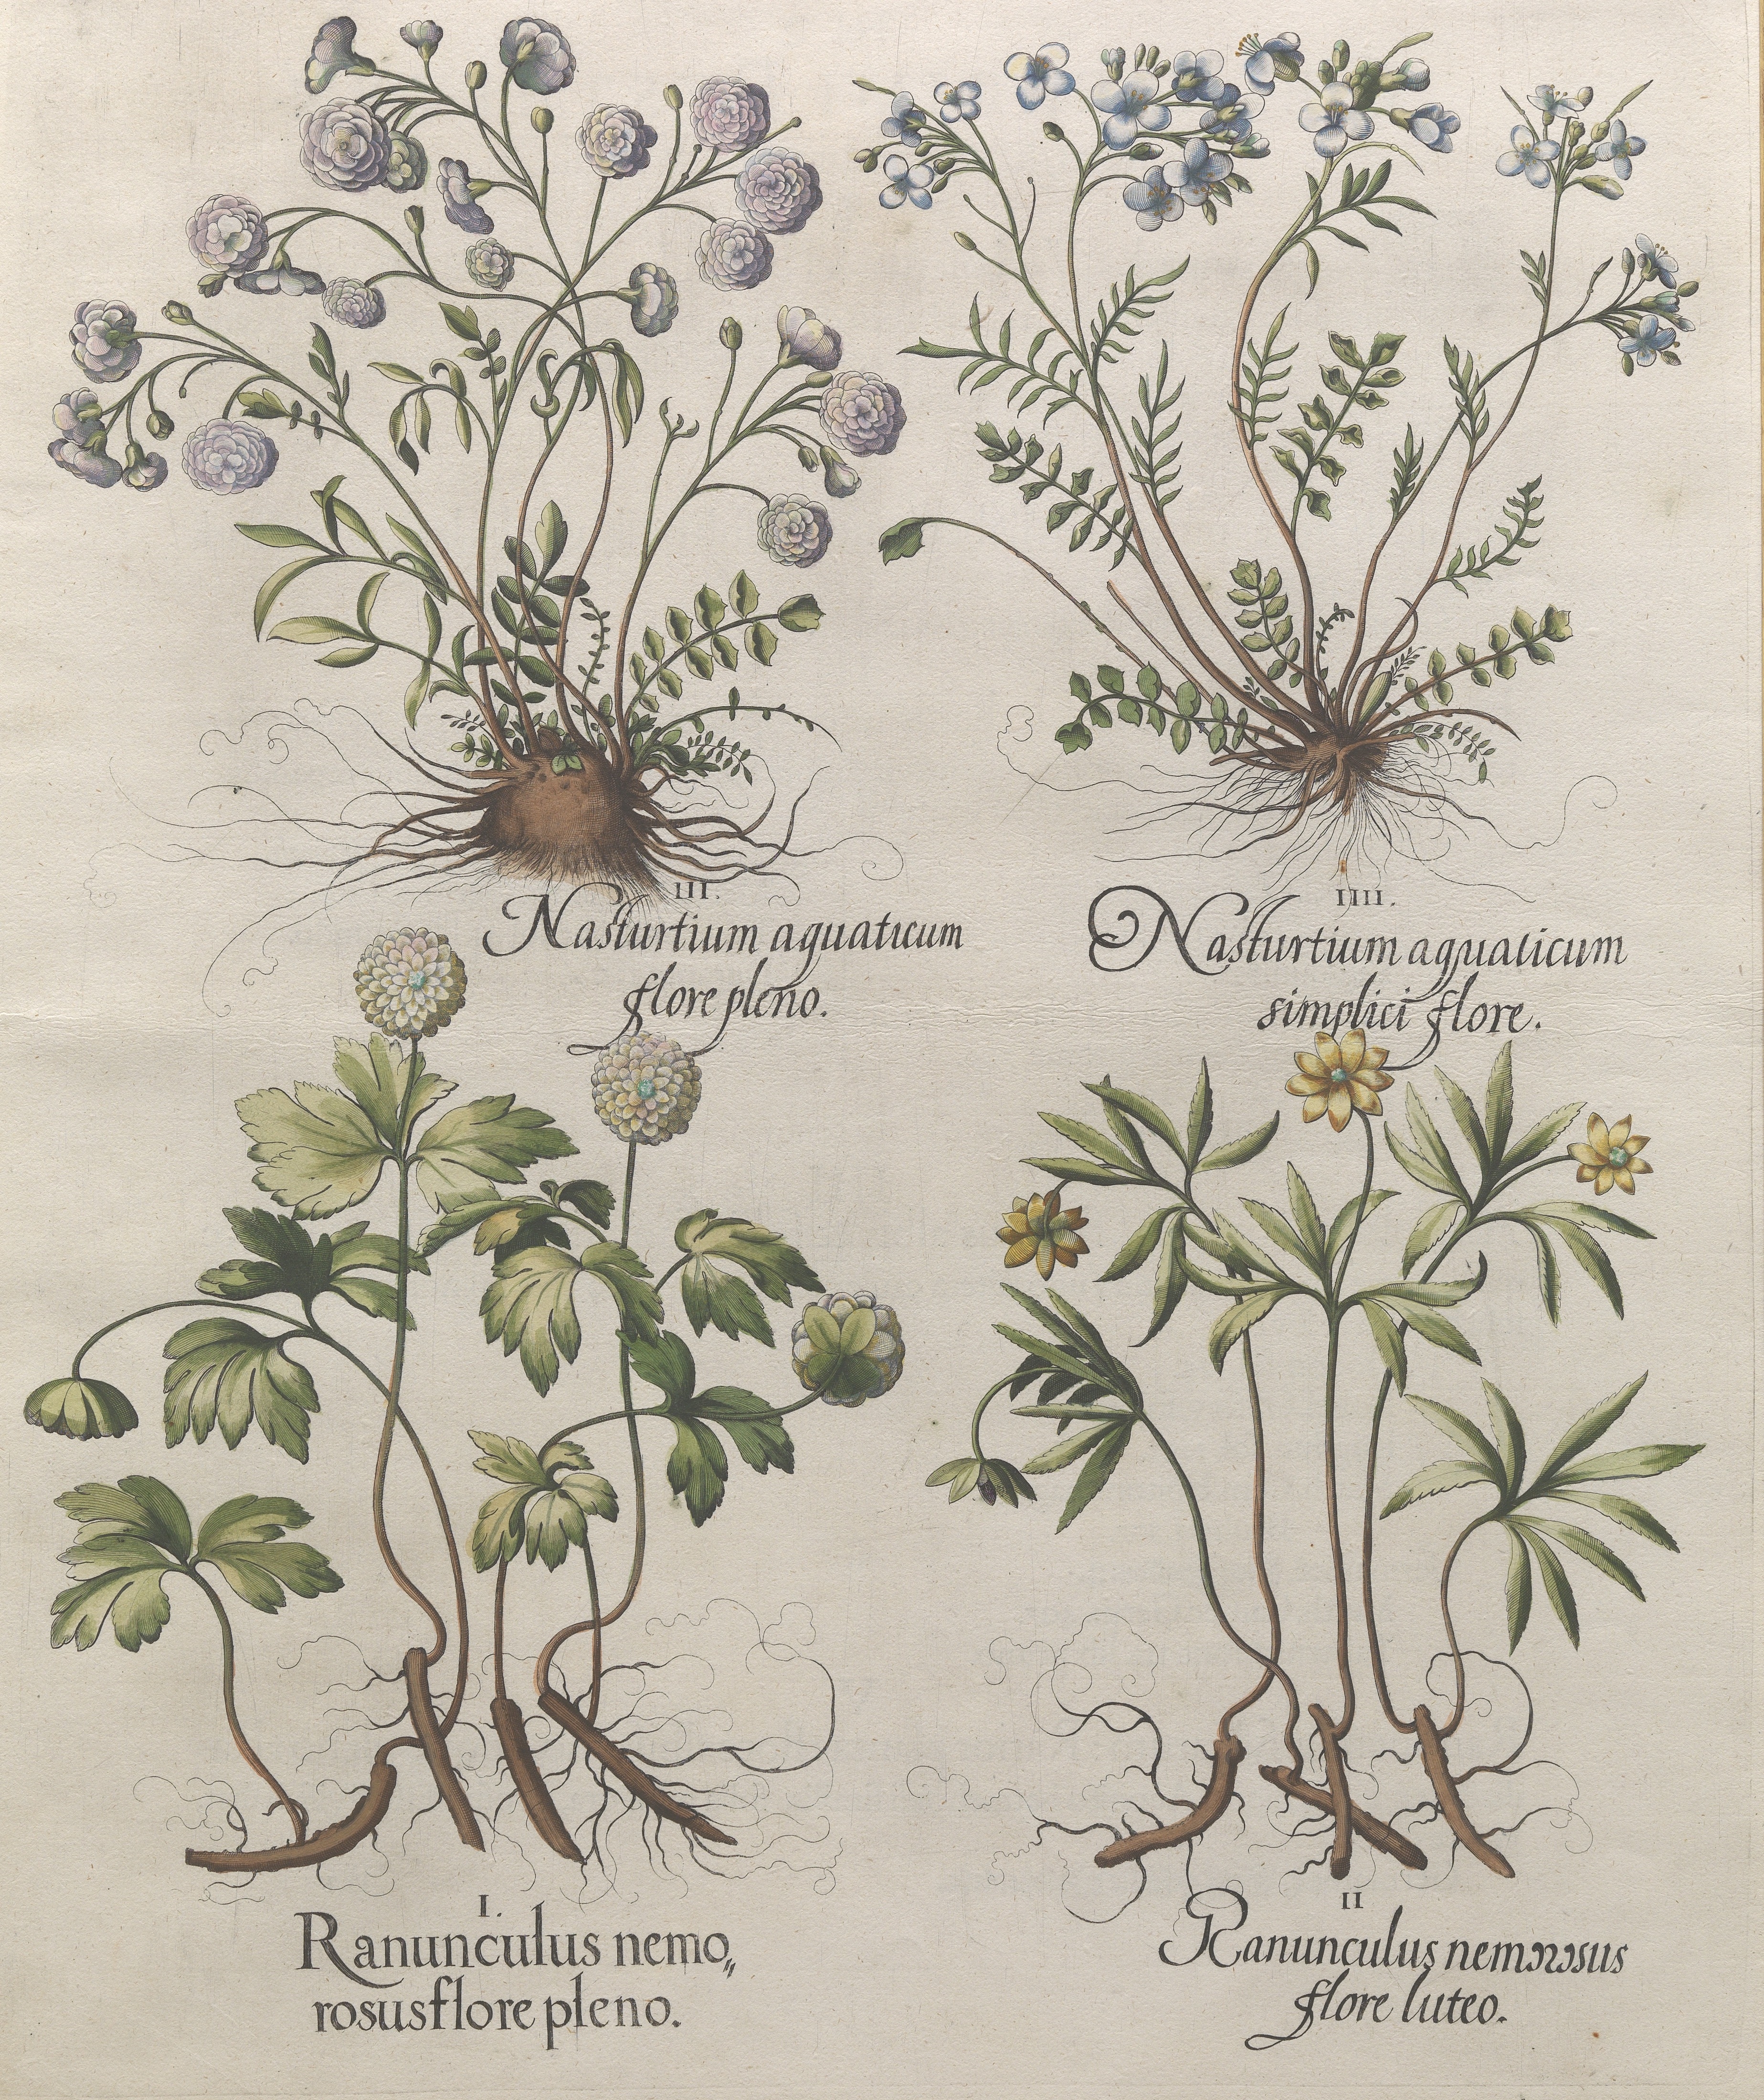 I. Ranunculus nemo, rosus flore pleno, etc.", from Hortus Eysttensis (Garden of Eichstätt) by Basilius Besler, 1613